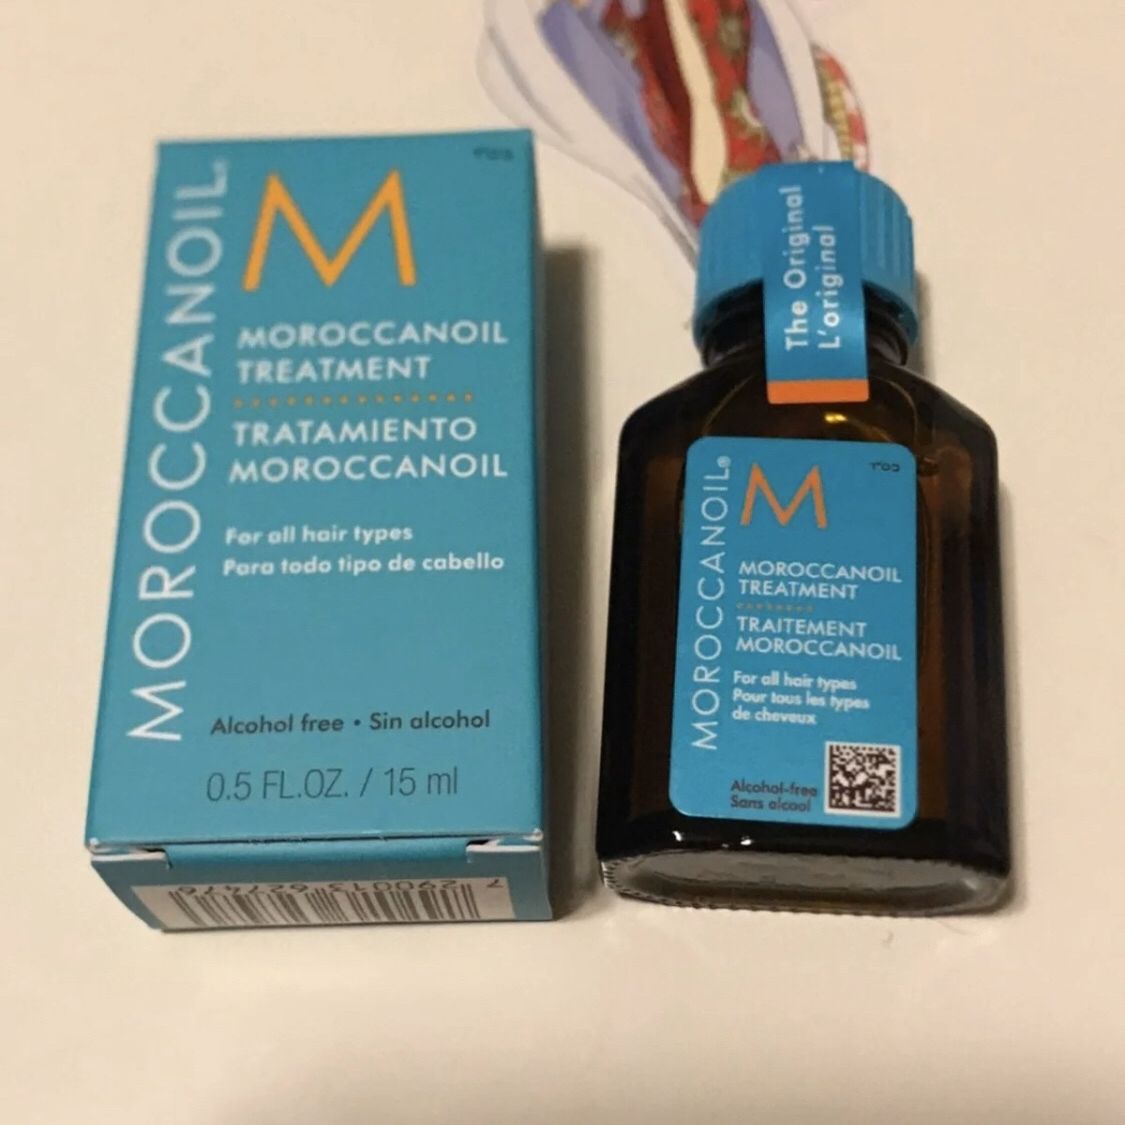 Moroccanoil Treatment Oil (0.5 FL oz / 15ml